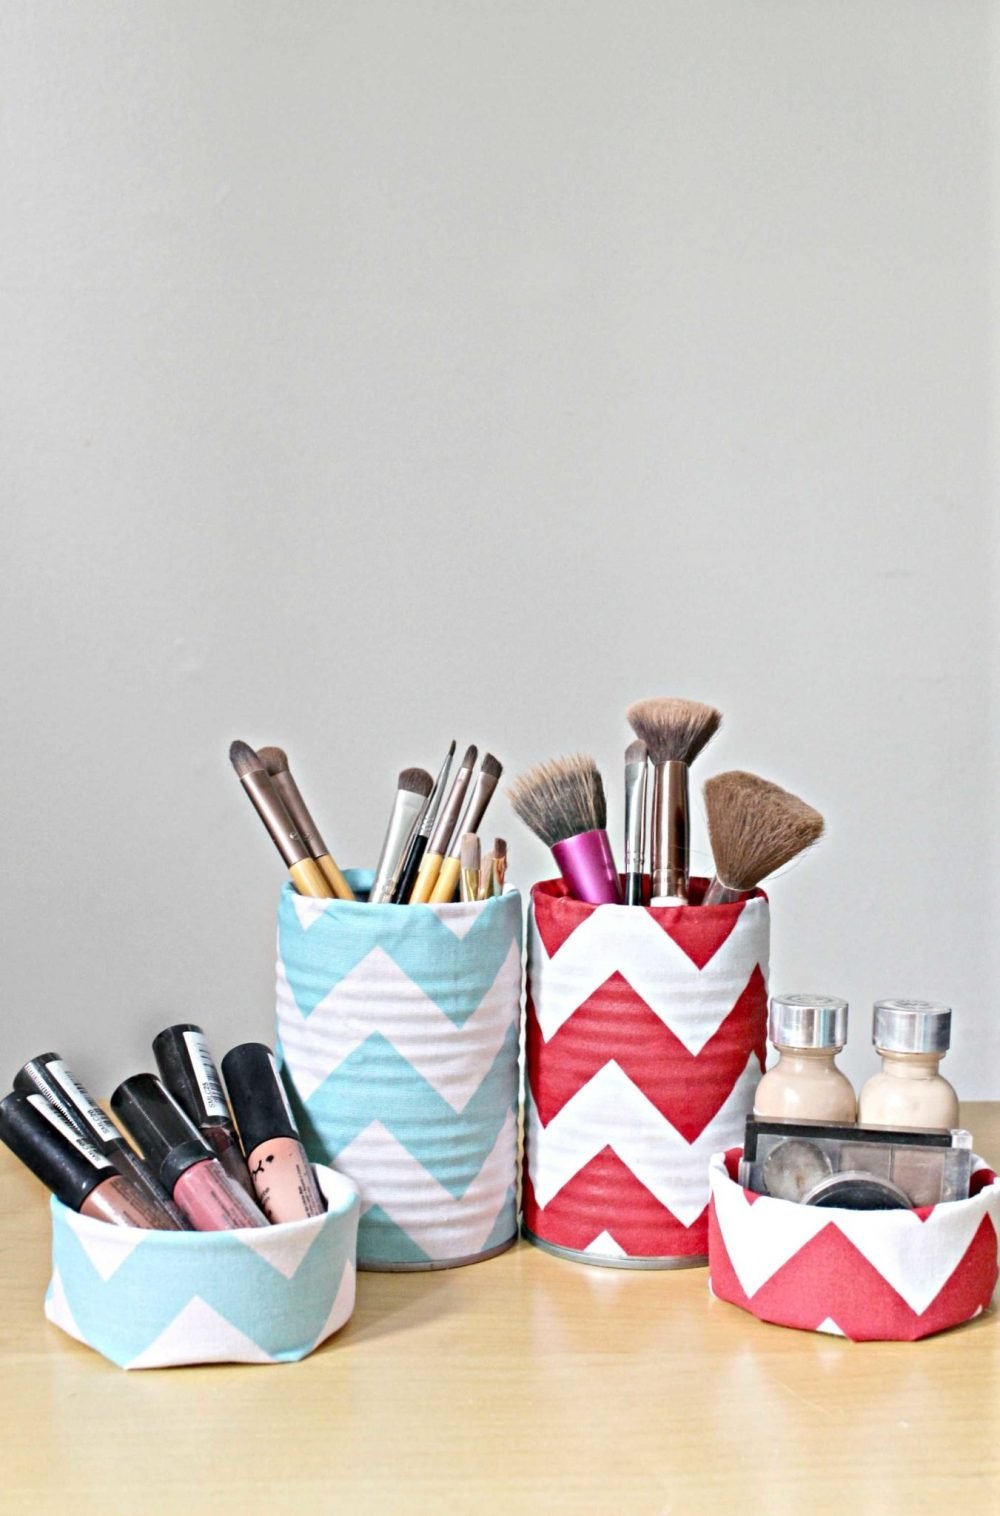 DIY makeup organizer set for brushes and cosmetics